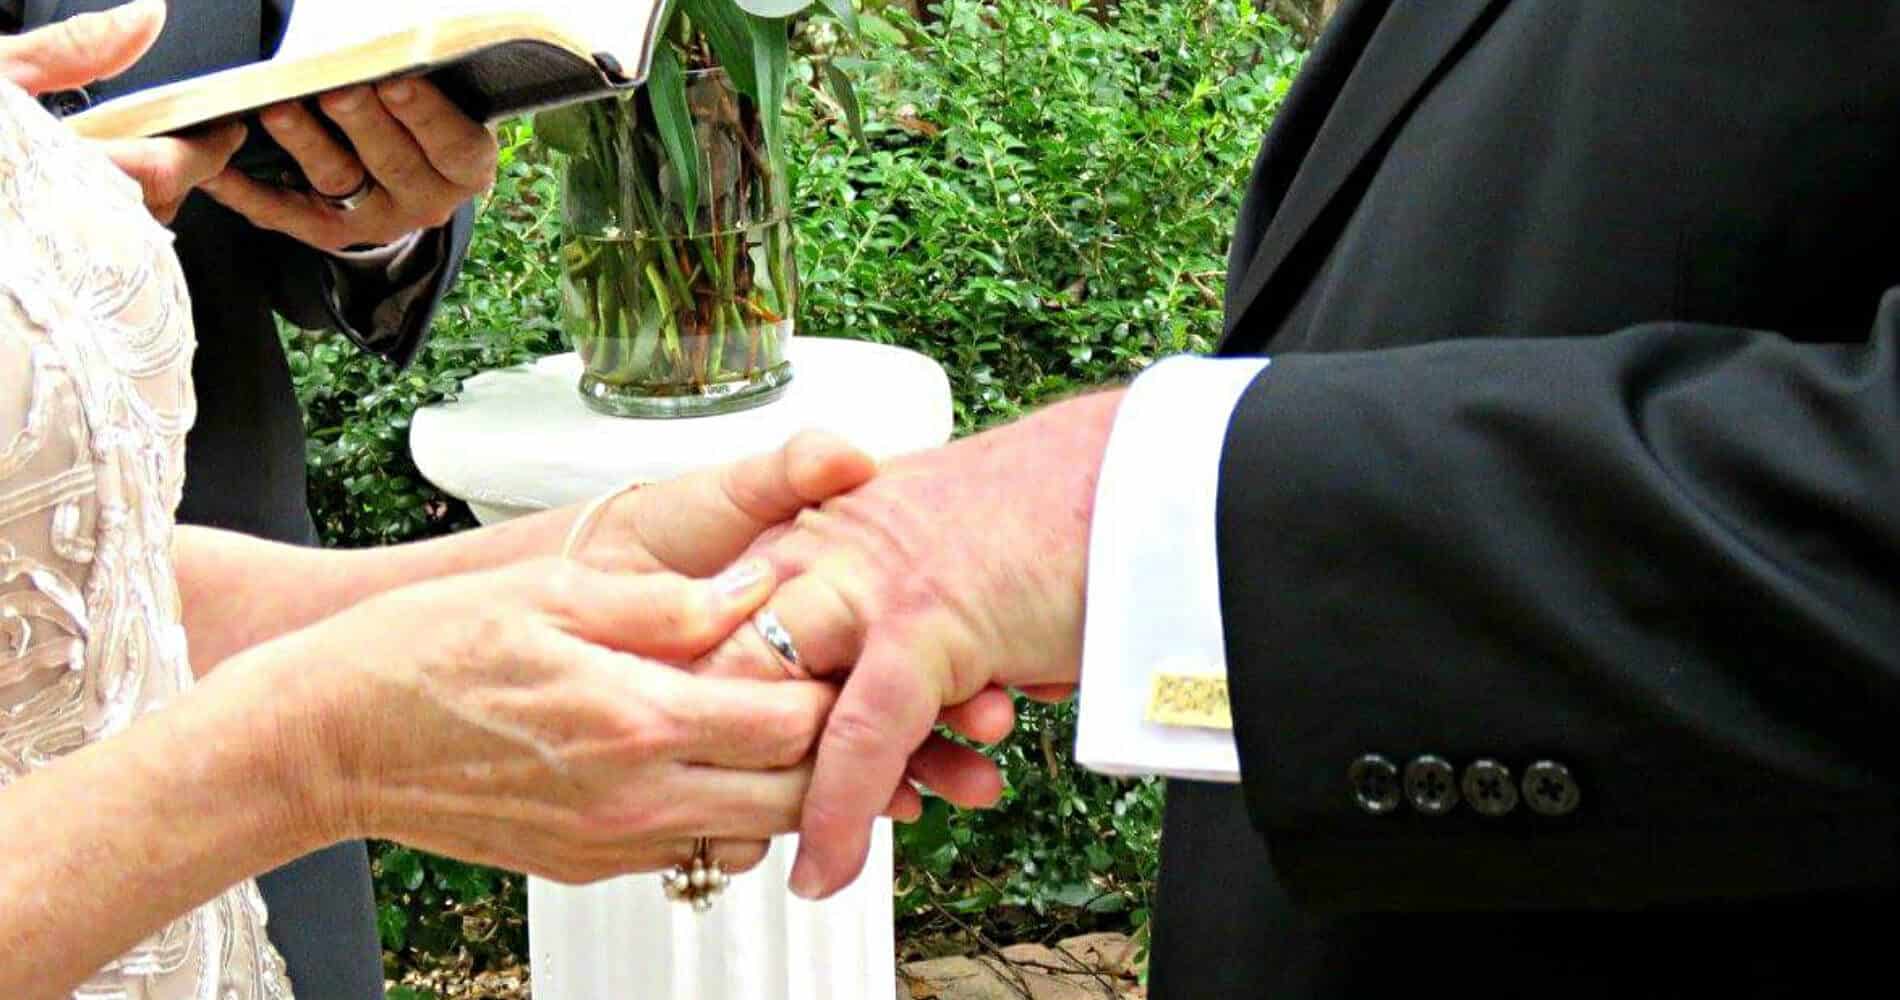 Bride in white dress putting ring on groom’s finger, officiant in rear holding prayer book, red roses in vase